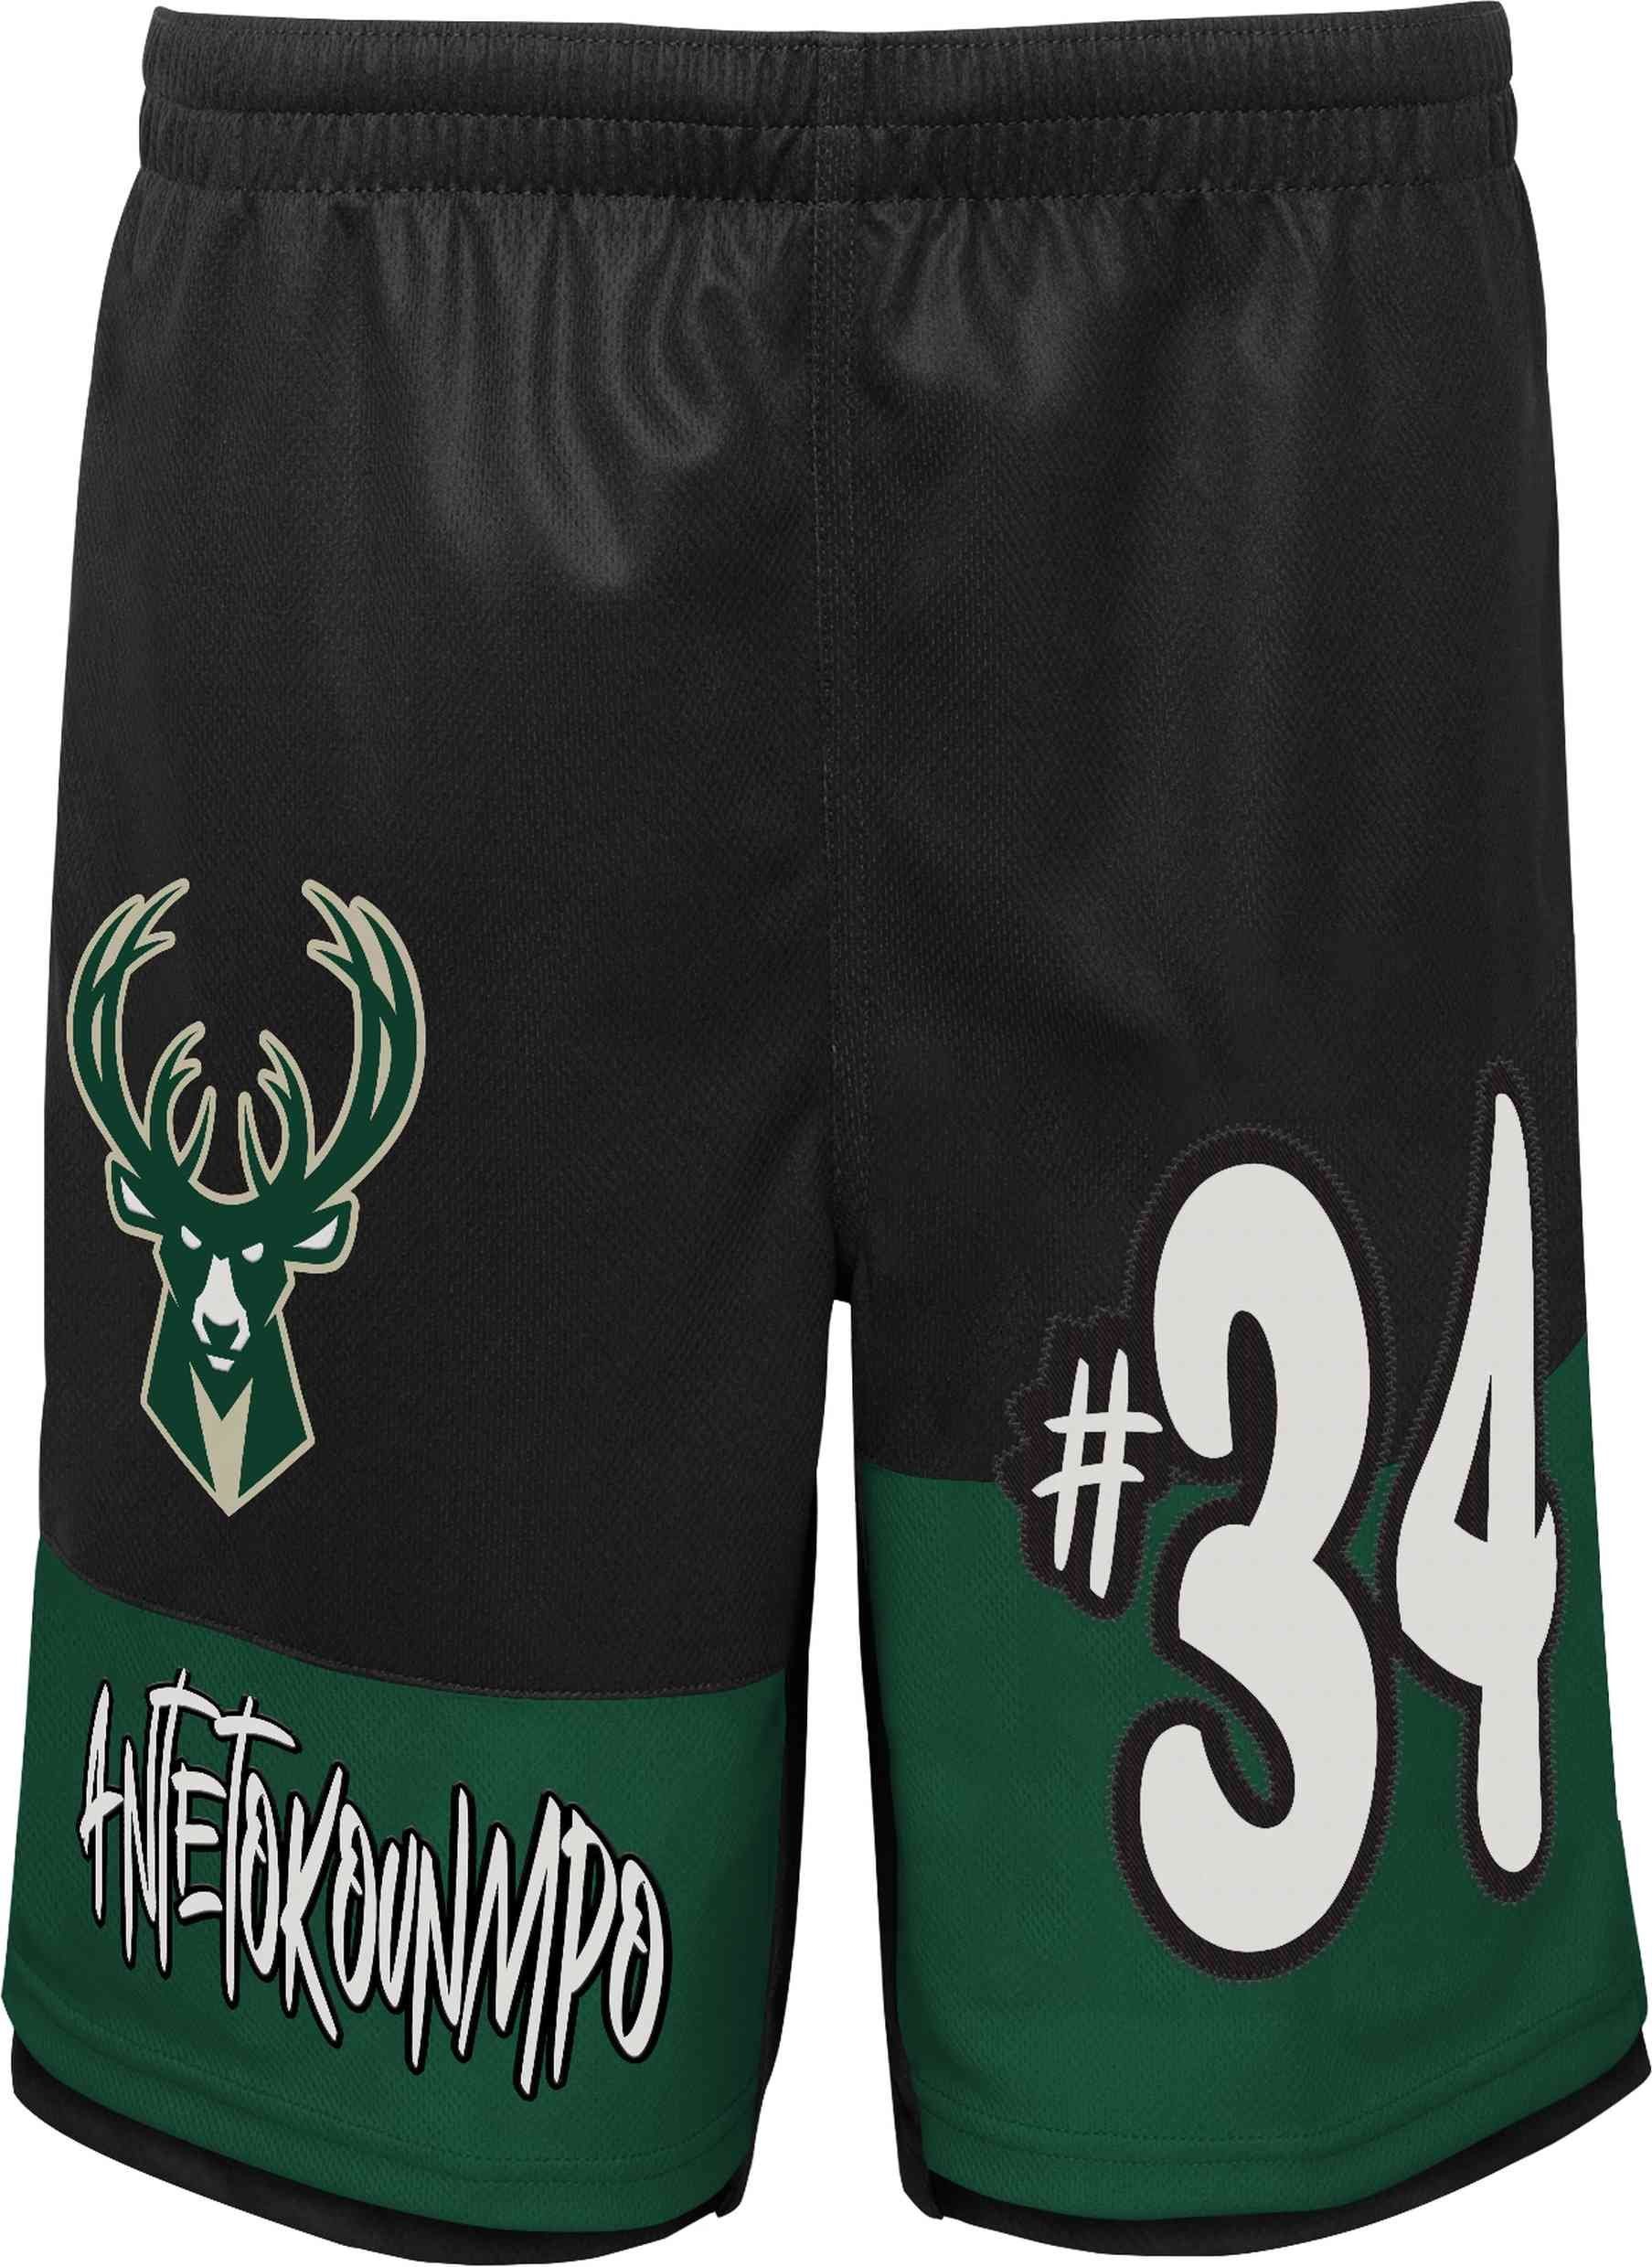 Milwaukee Pandemonium Bucks Outerstuff N&N Antetokounmpo NBA Shorts